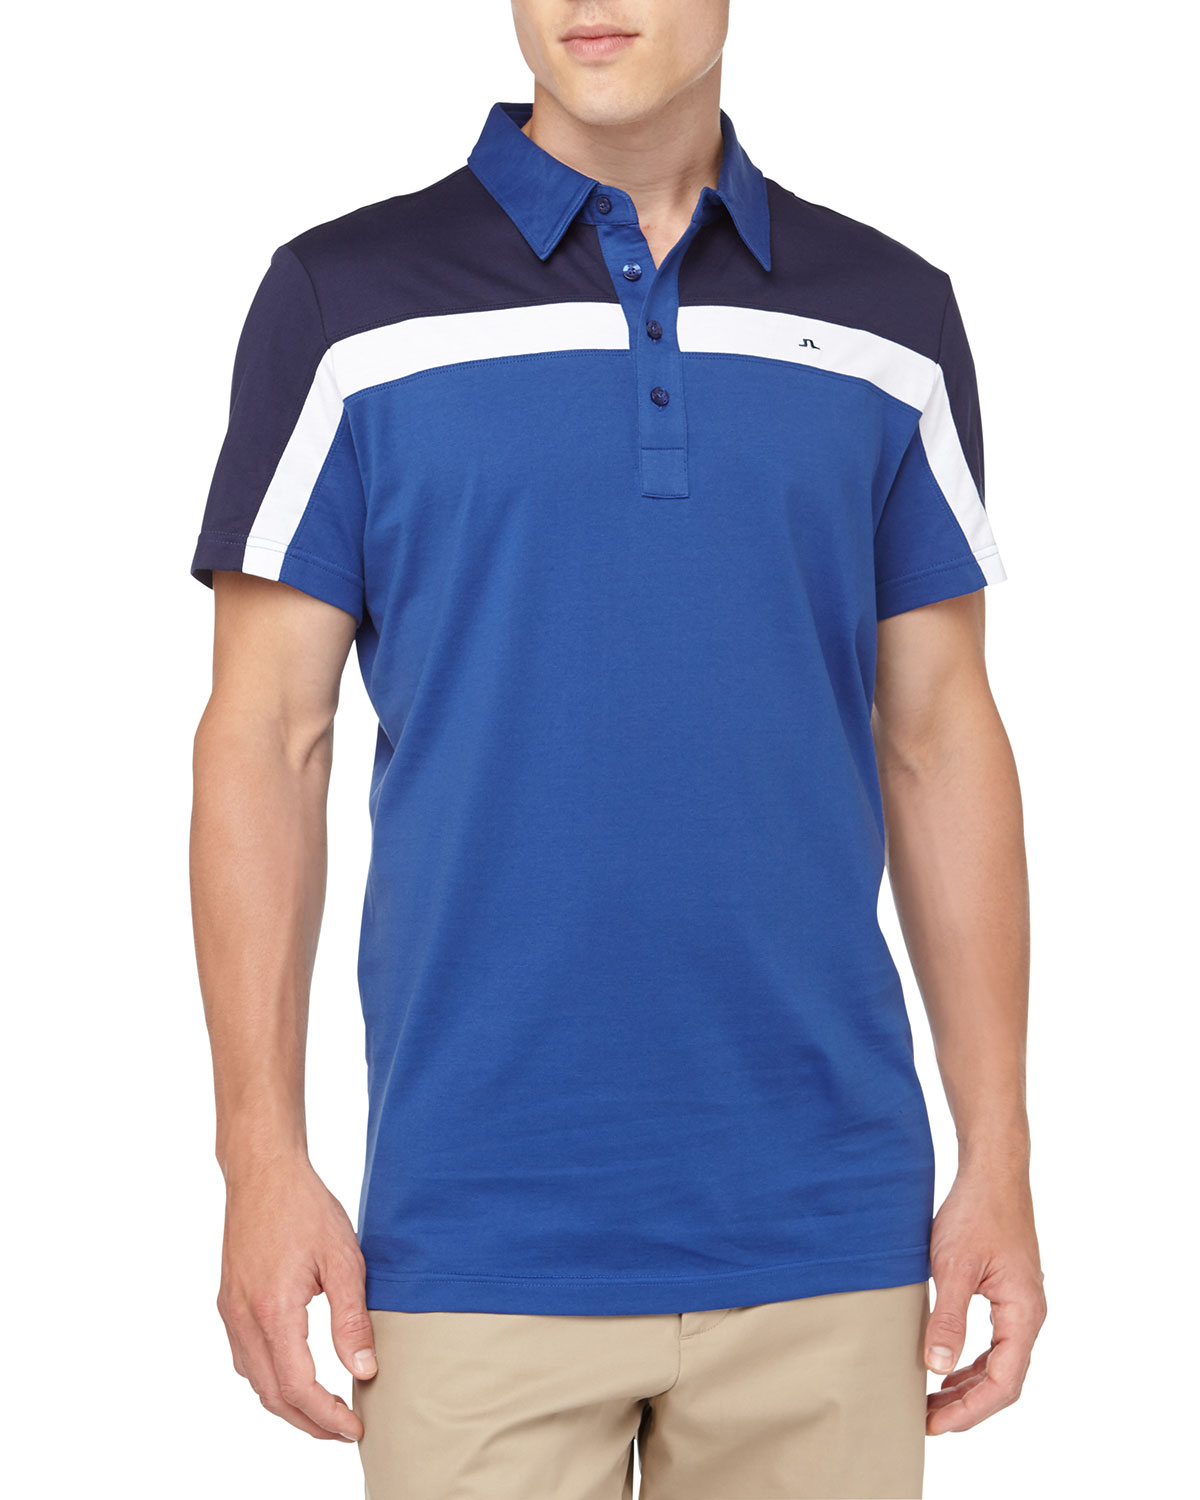 Lyst - J.Lindeberg Slim Striped Golf Polo Blue Xxl in Blue for Men